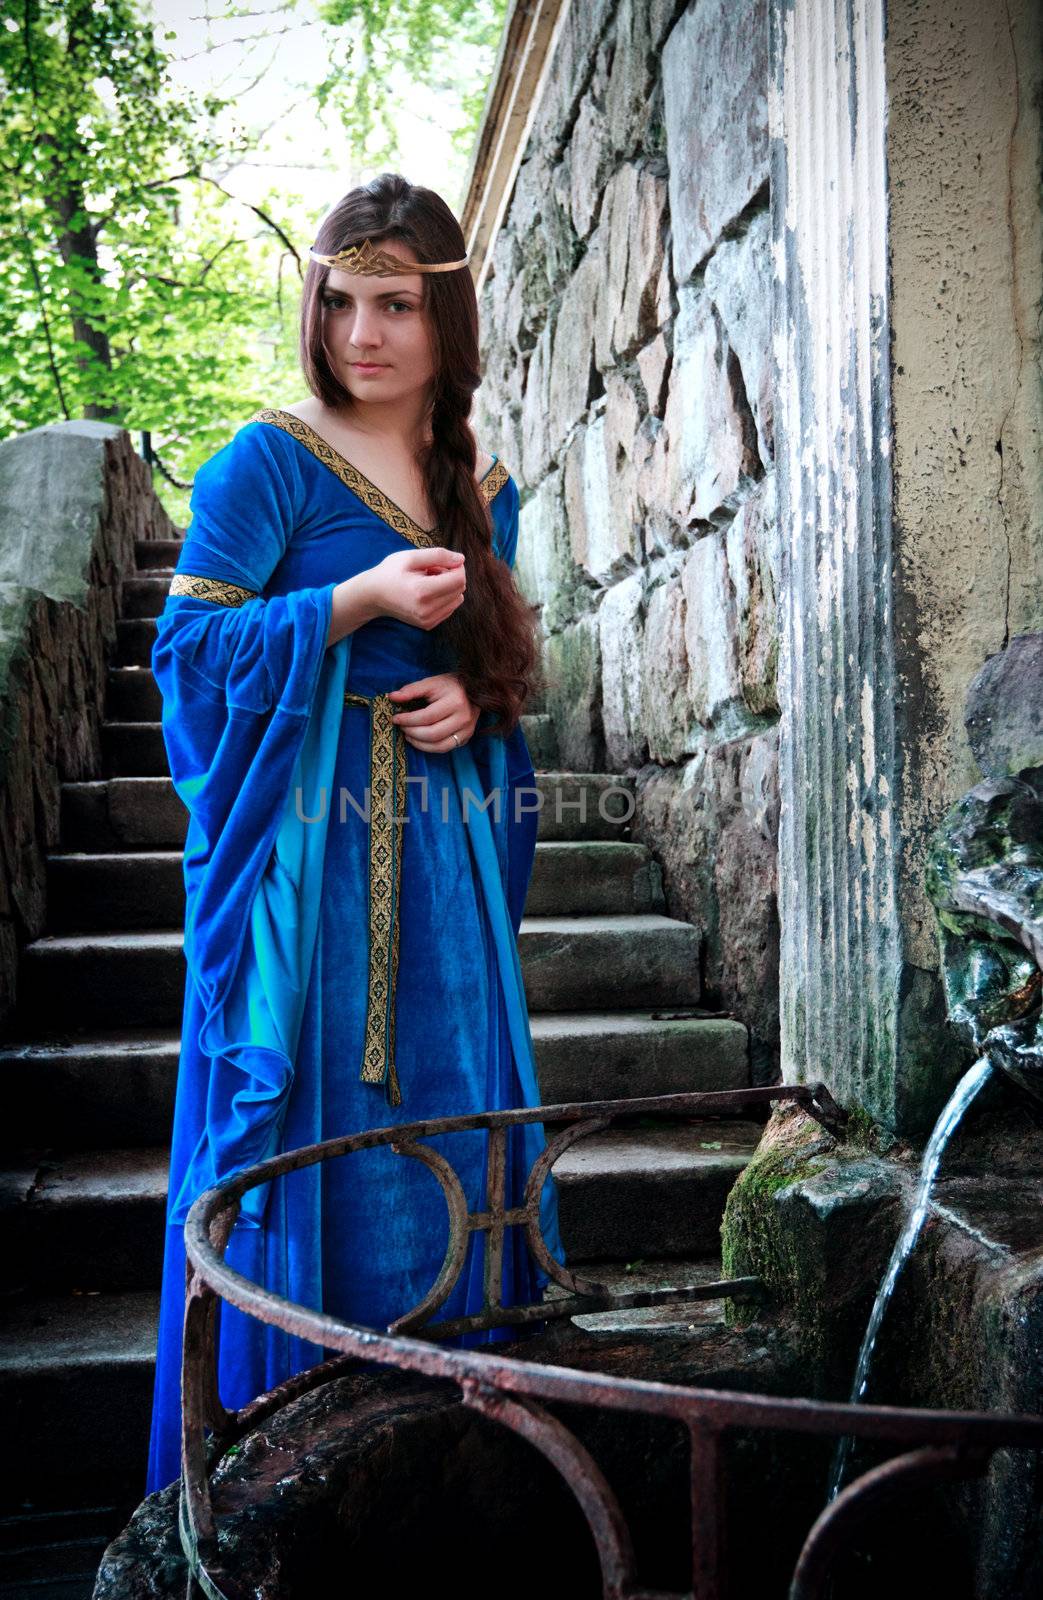 medieval girl next ancient spring by petr_malyshev